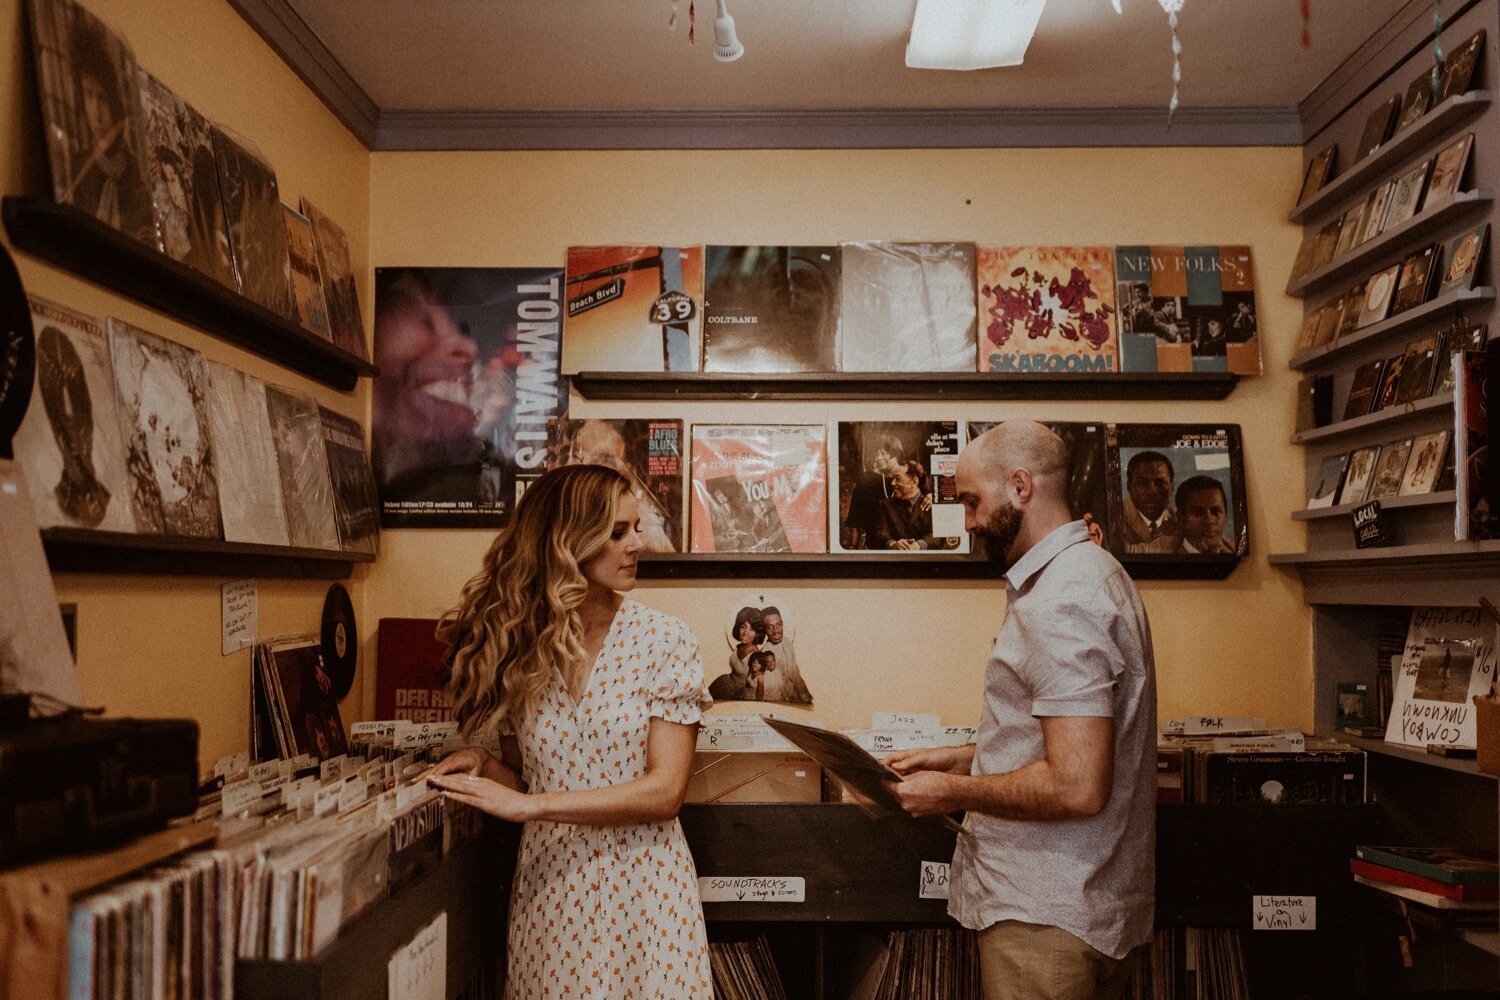 68-montague-ma-romantic-book-vinyl-store-engagement-session-boston-photographer.jpg